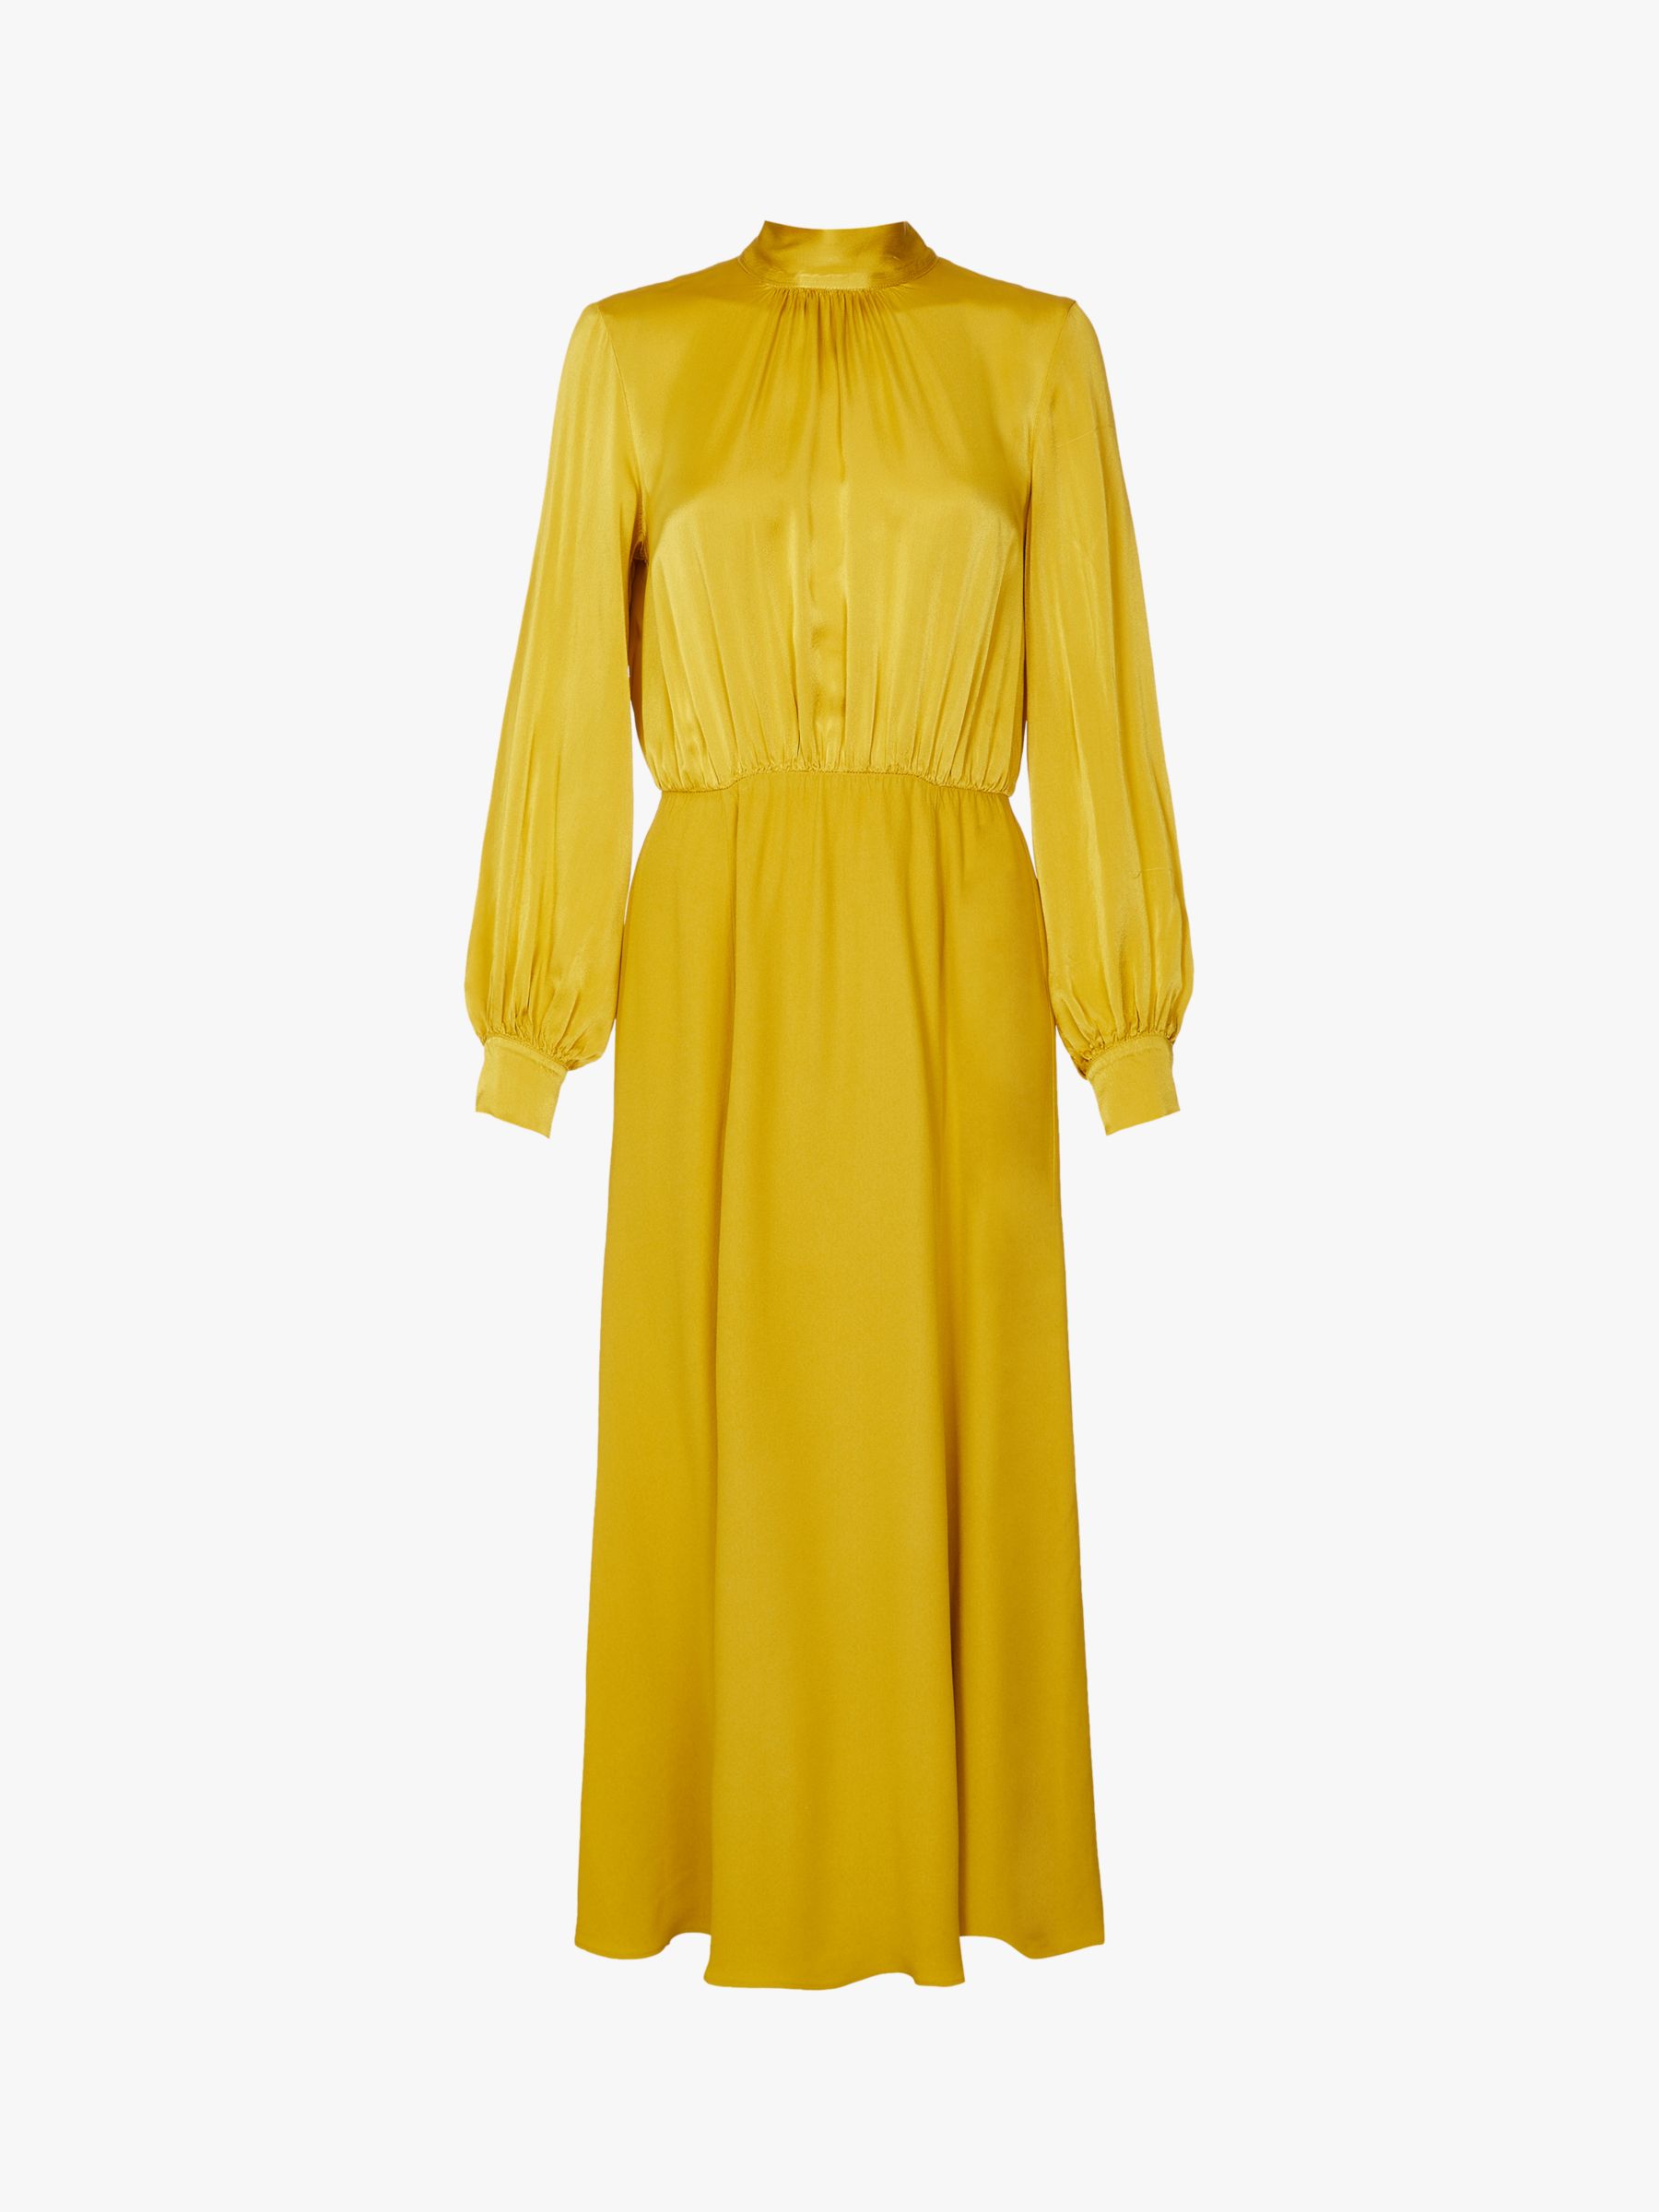 ghost yellow dress